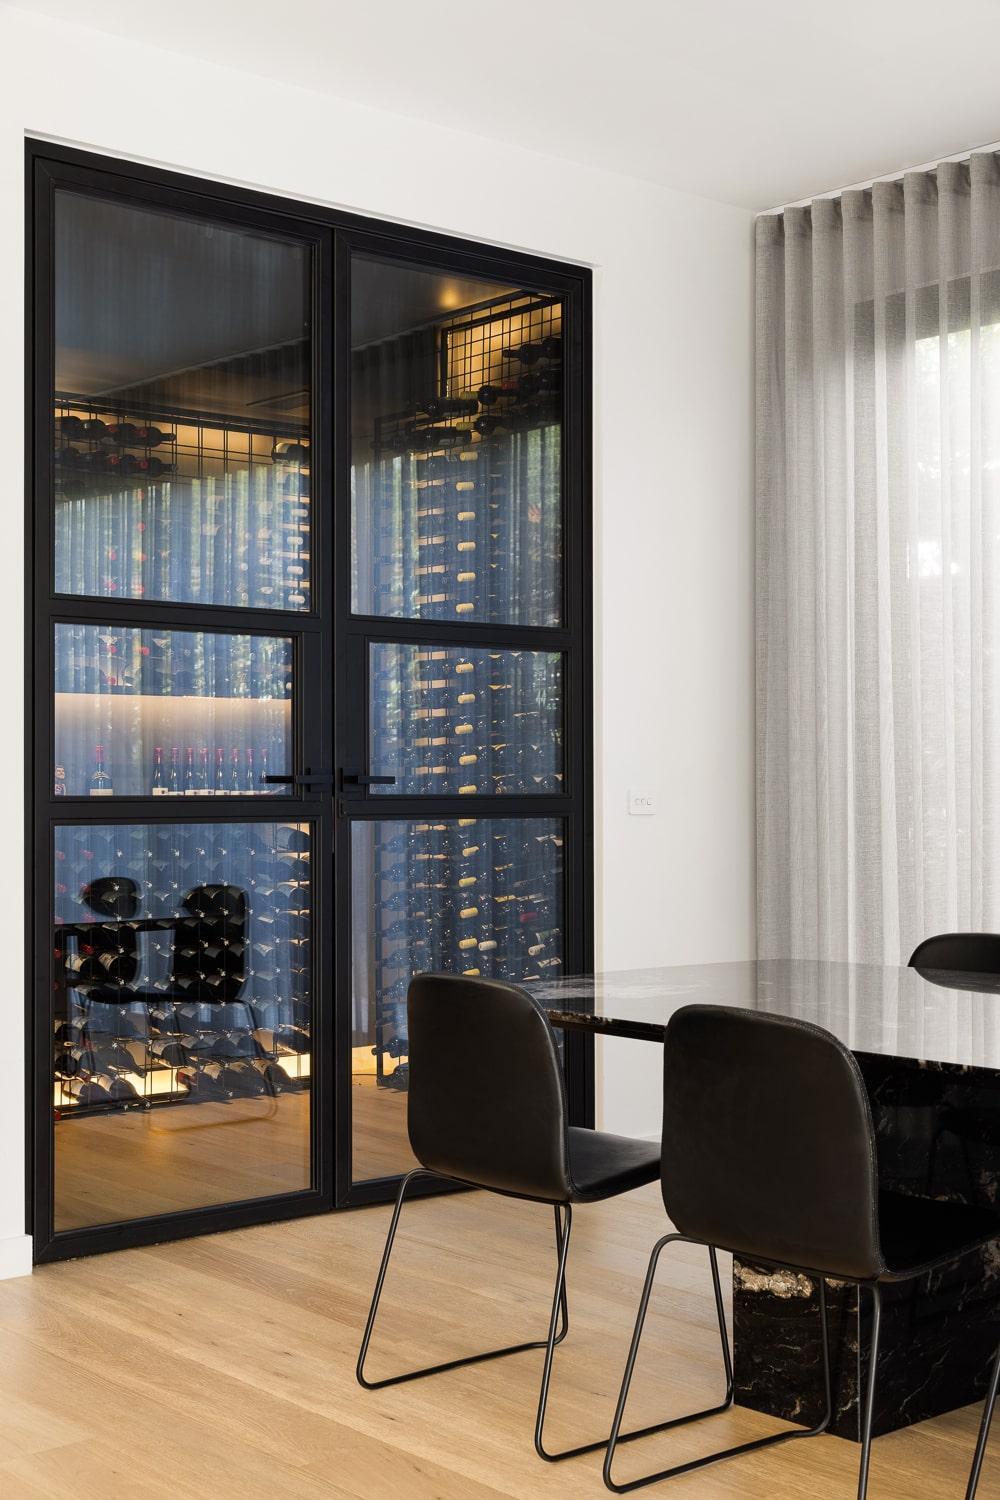 Contemporary, sleek steel doors leading to a wine cellar